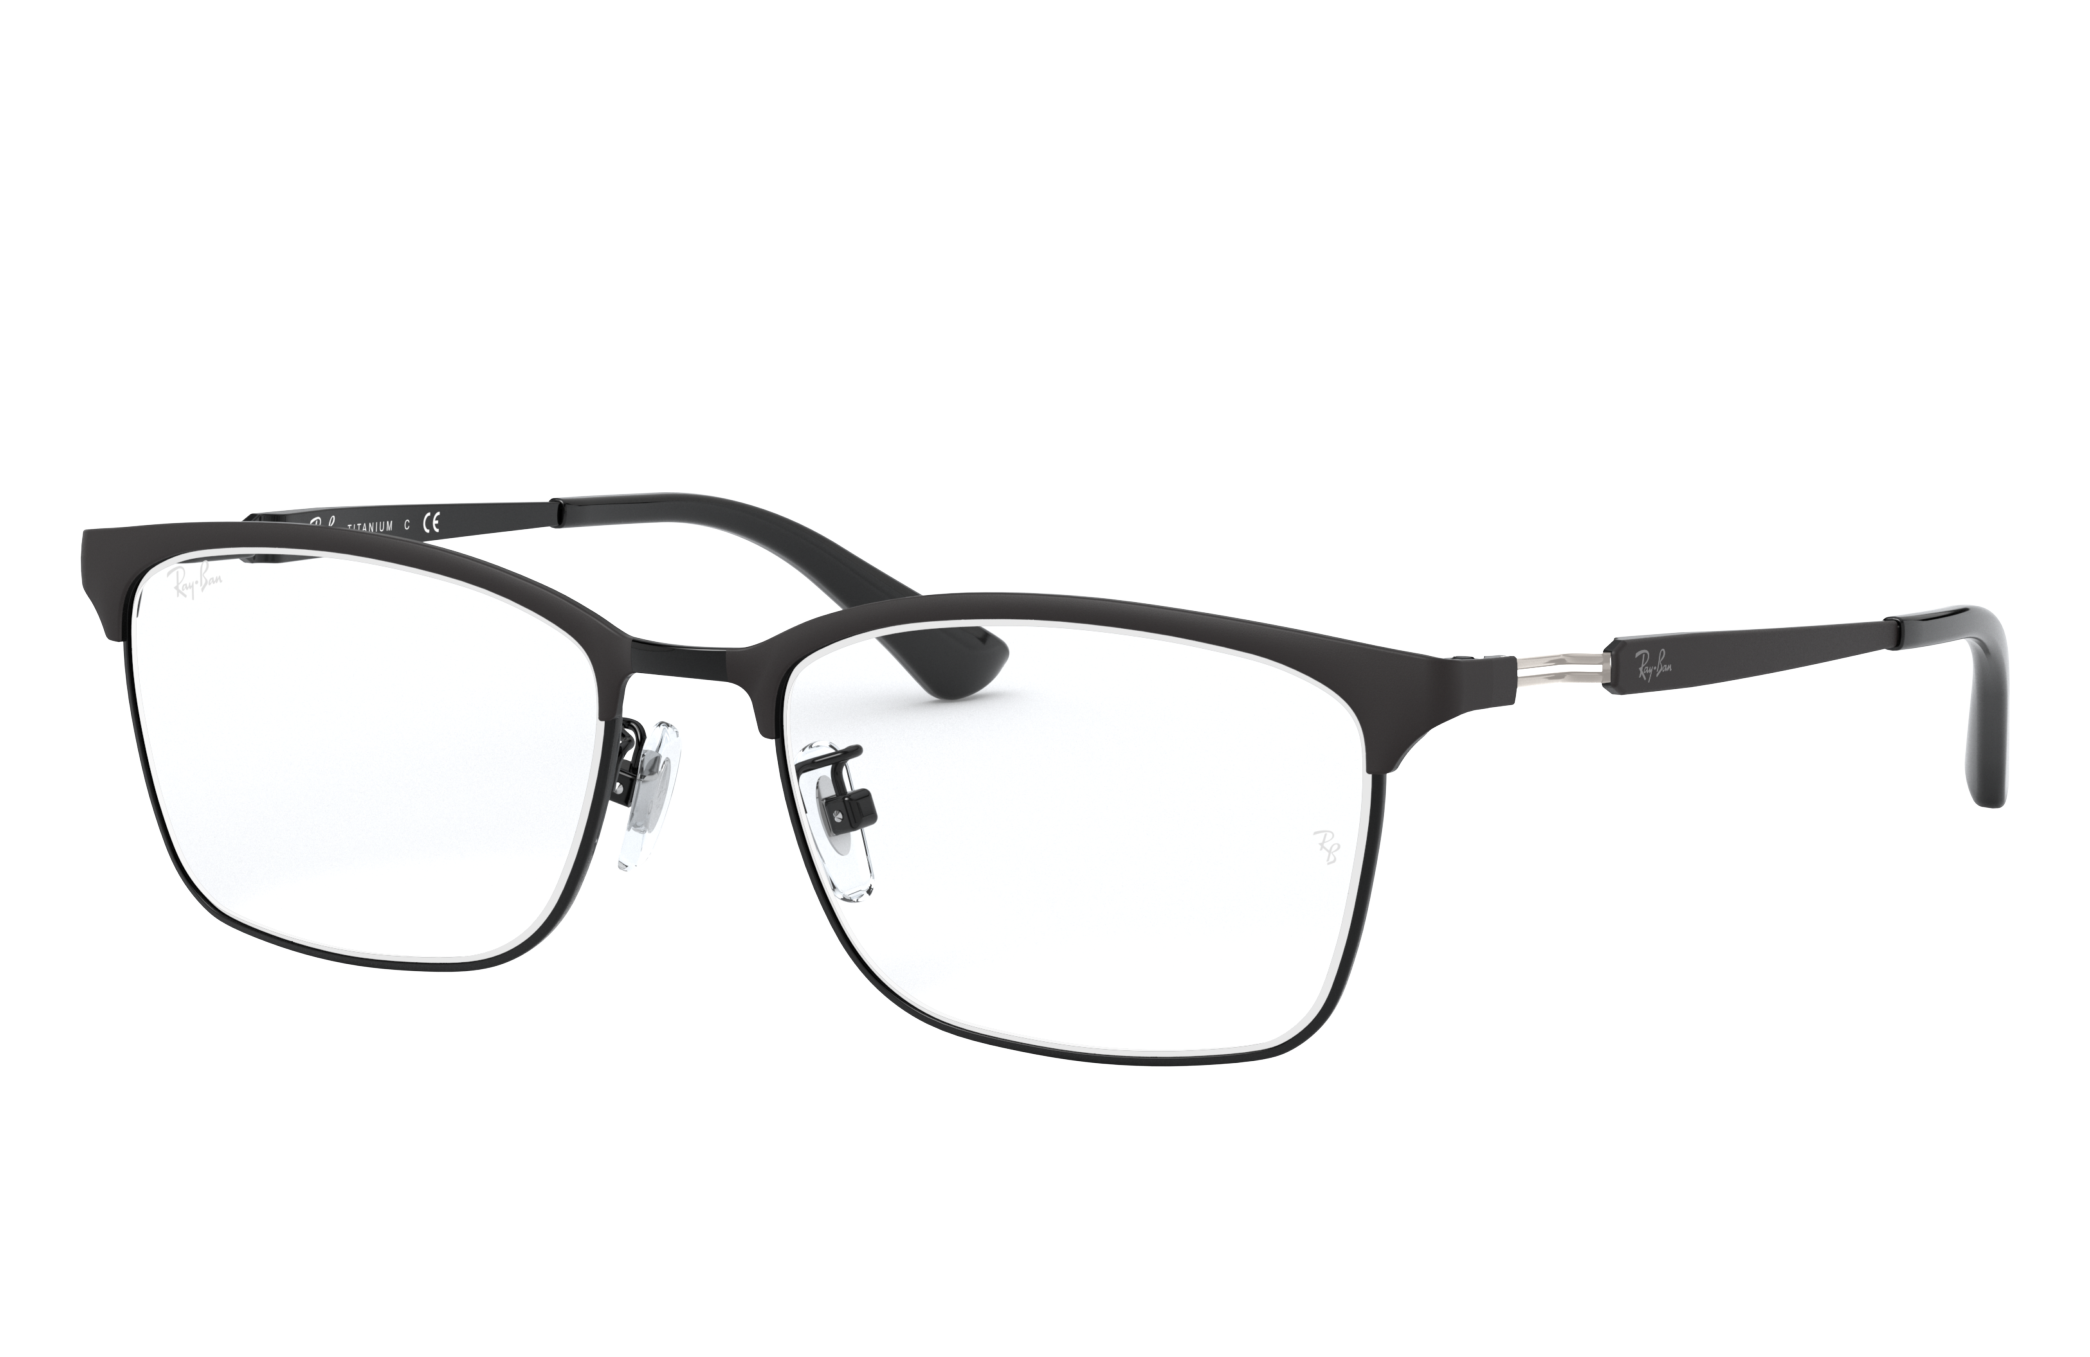 Rb8751 Optics Eyeglasses with Black Frame - RB8751D | Ray-Ban®